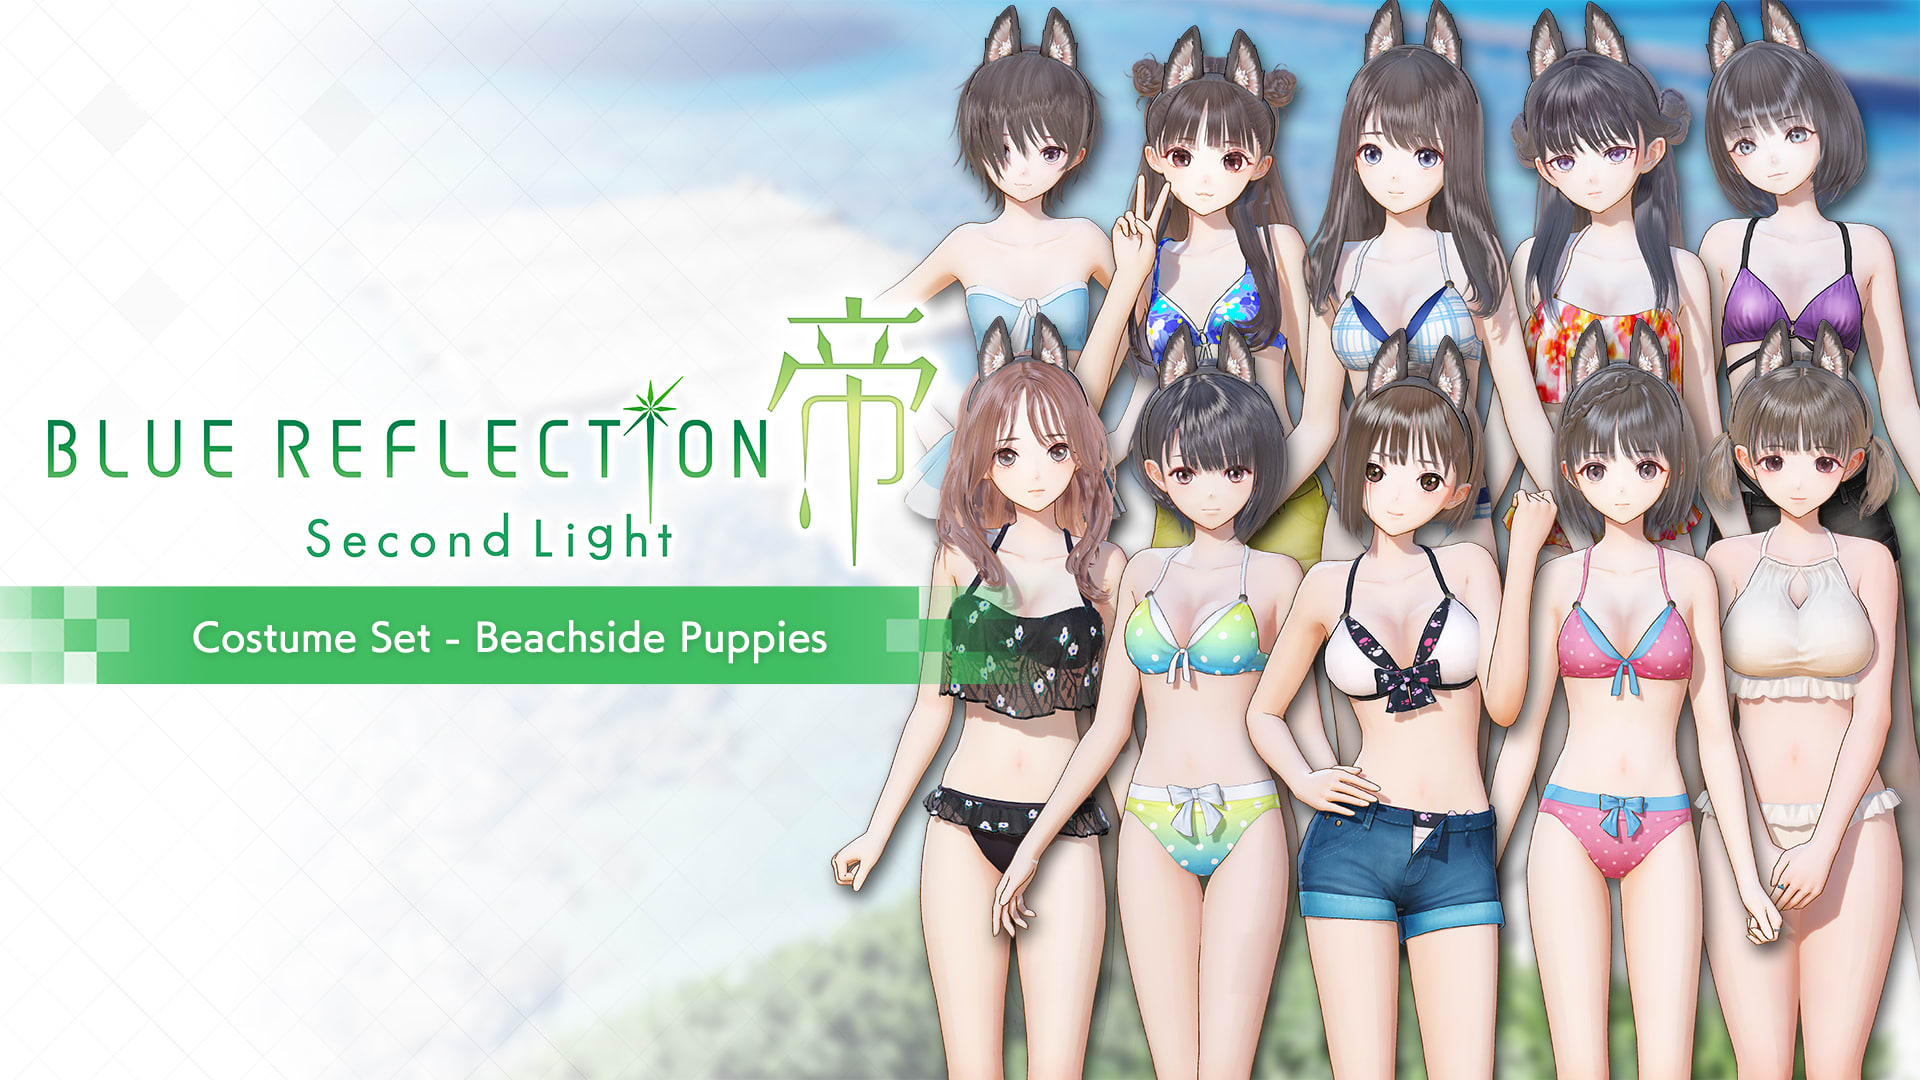 Costume Set - Beachside Puppies 1